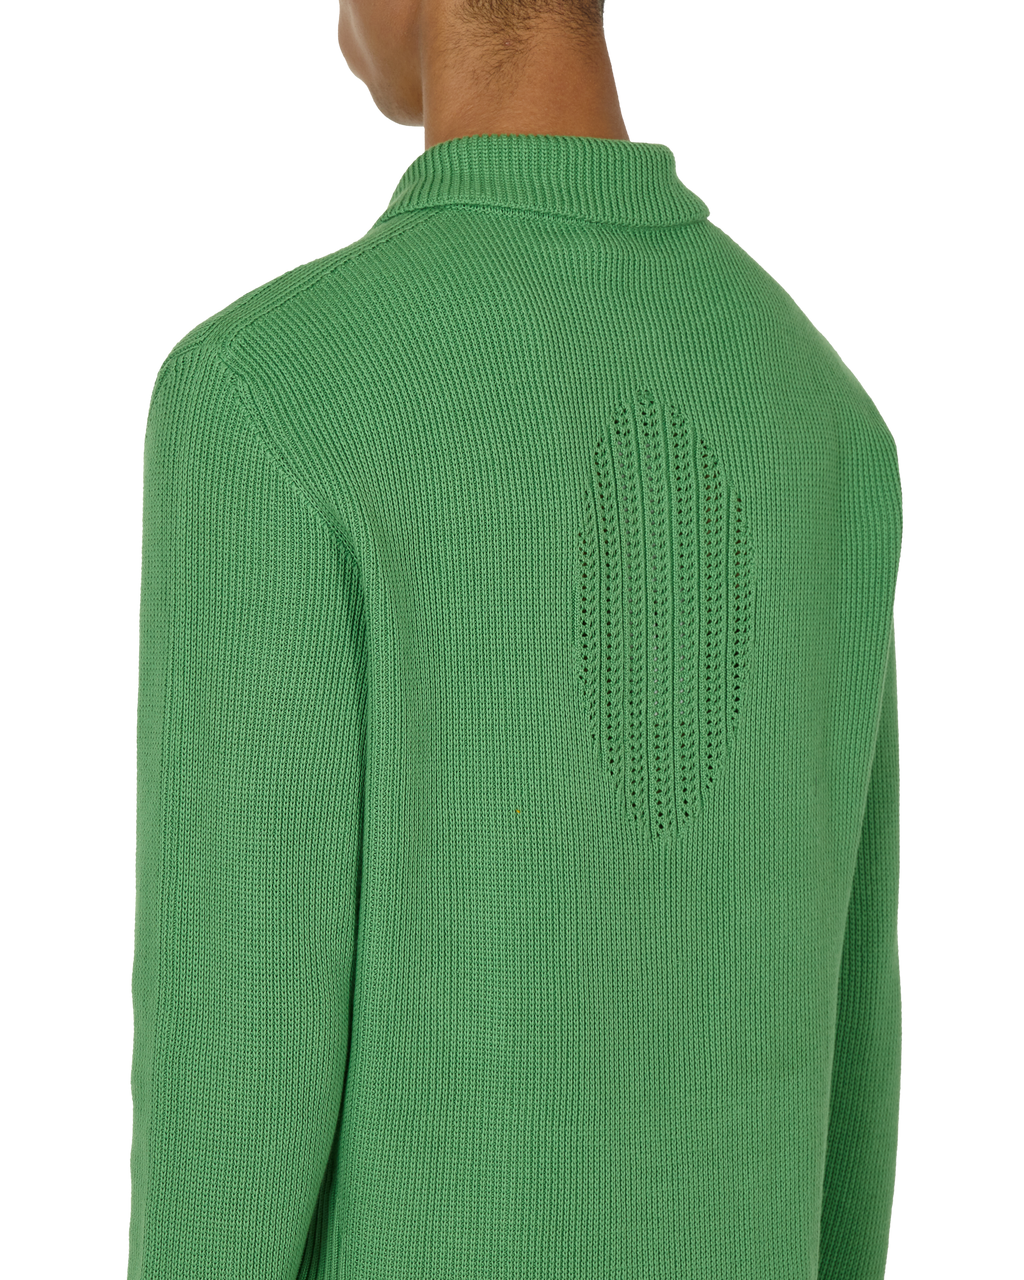 _J.L - A.L_ Lancet Zipped Sweater J277370-S-Green